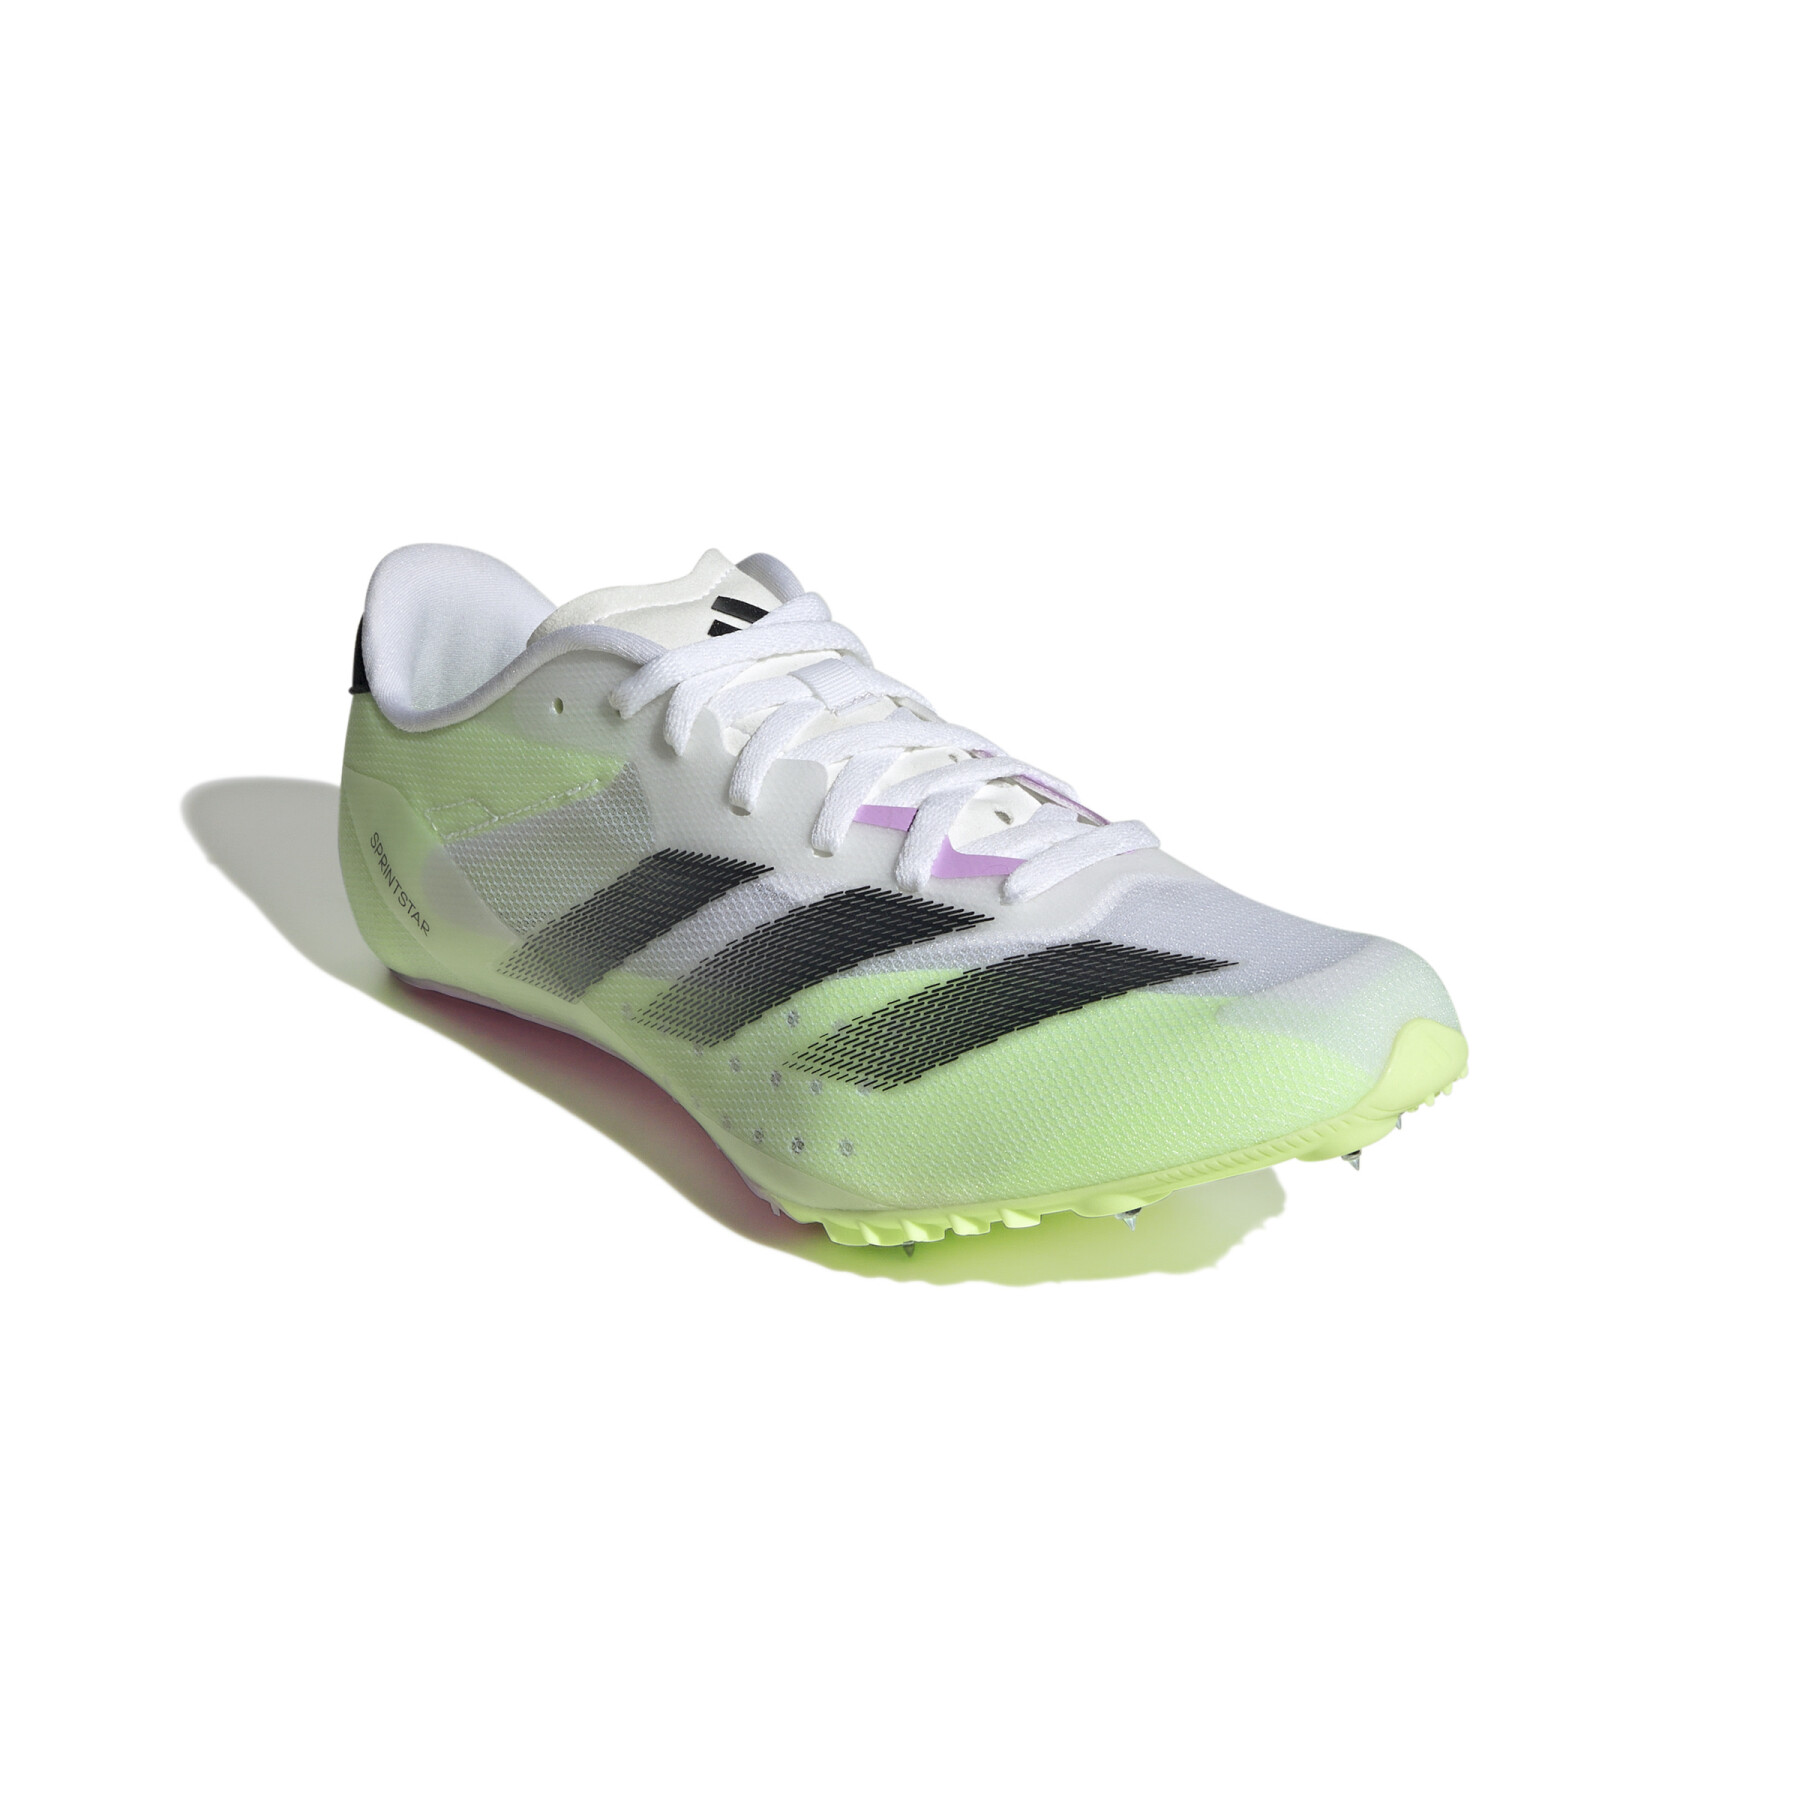 Chaussures d'athlétisme adidas Adizero Sprintstar